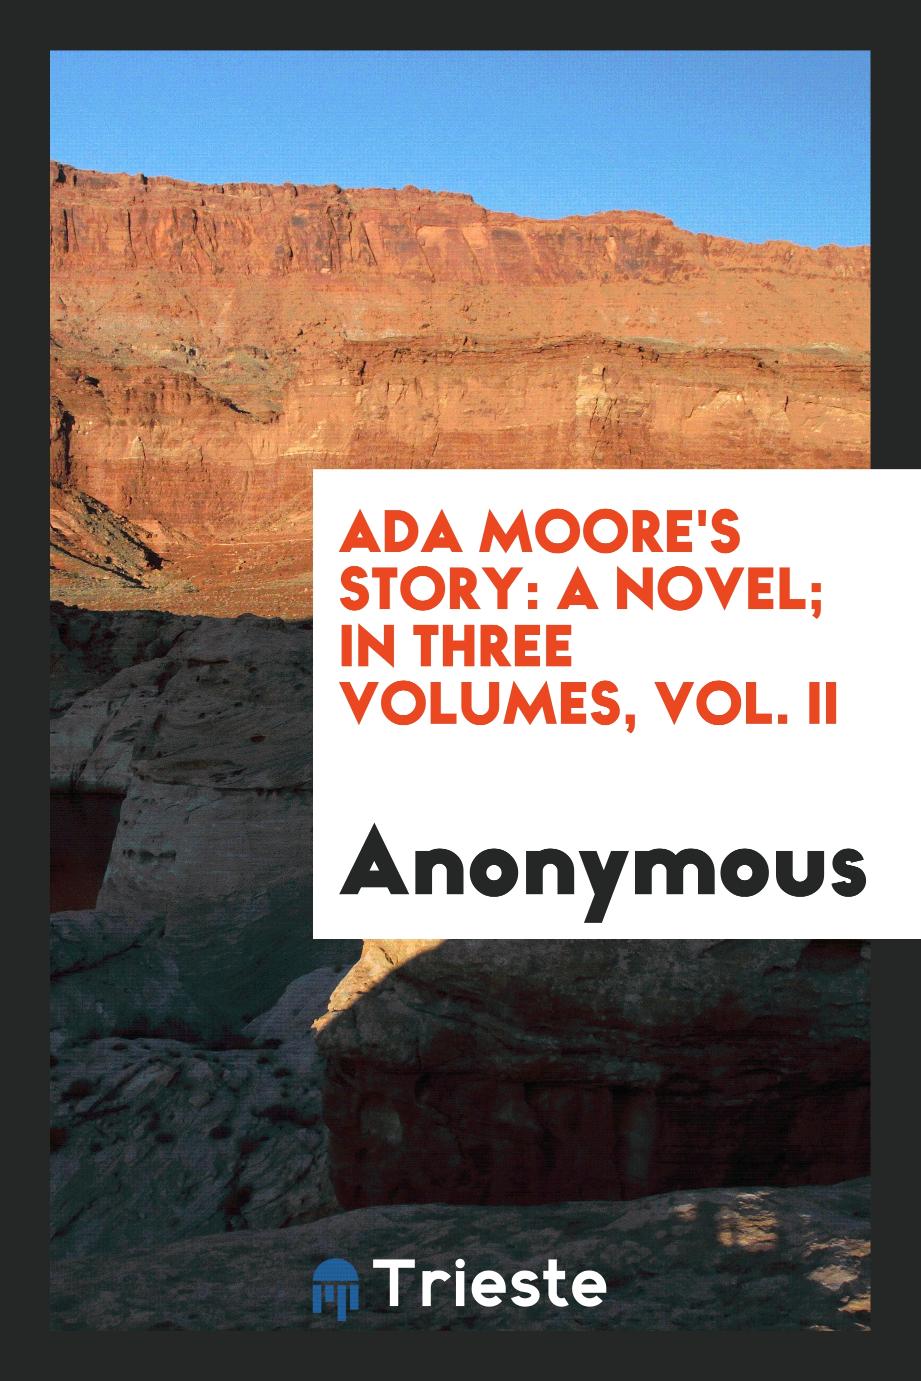 Ada Moore's story: a novel; In three volumes, Vol. II